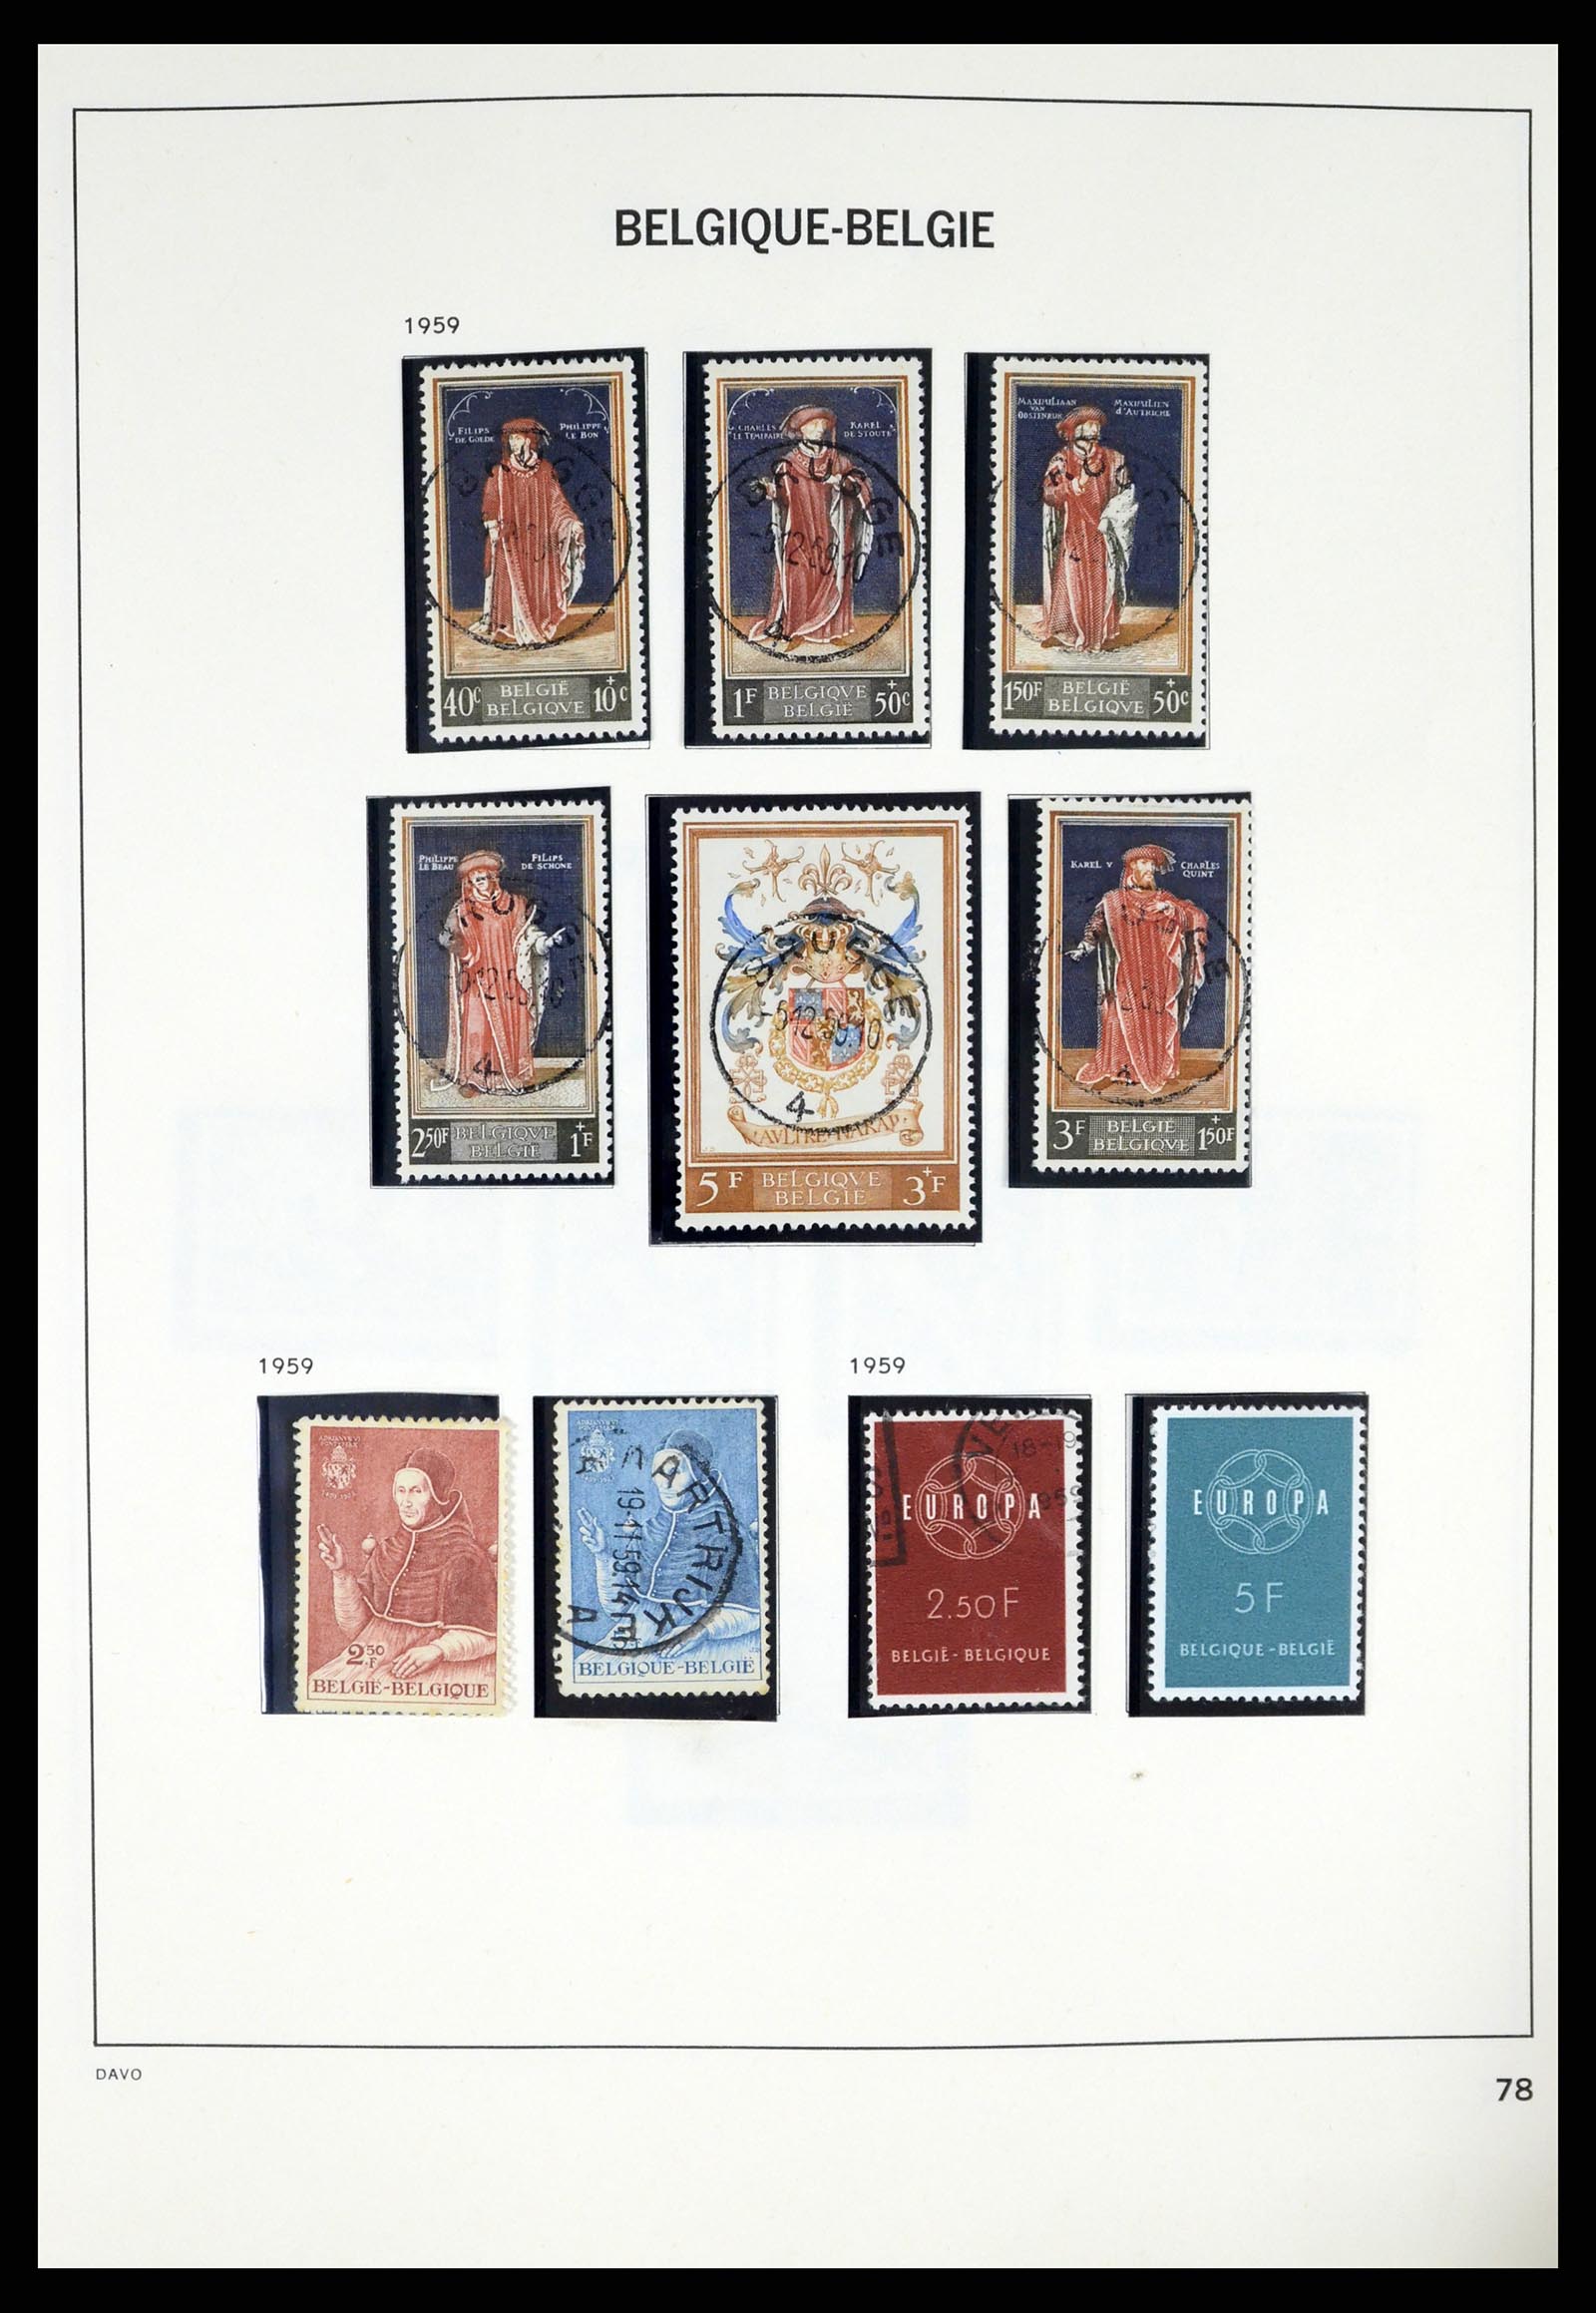 37367 074 - Stamp collection 37367 Belgium 1849-2003.